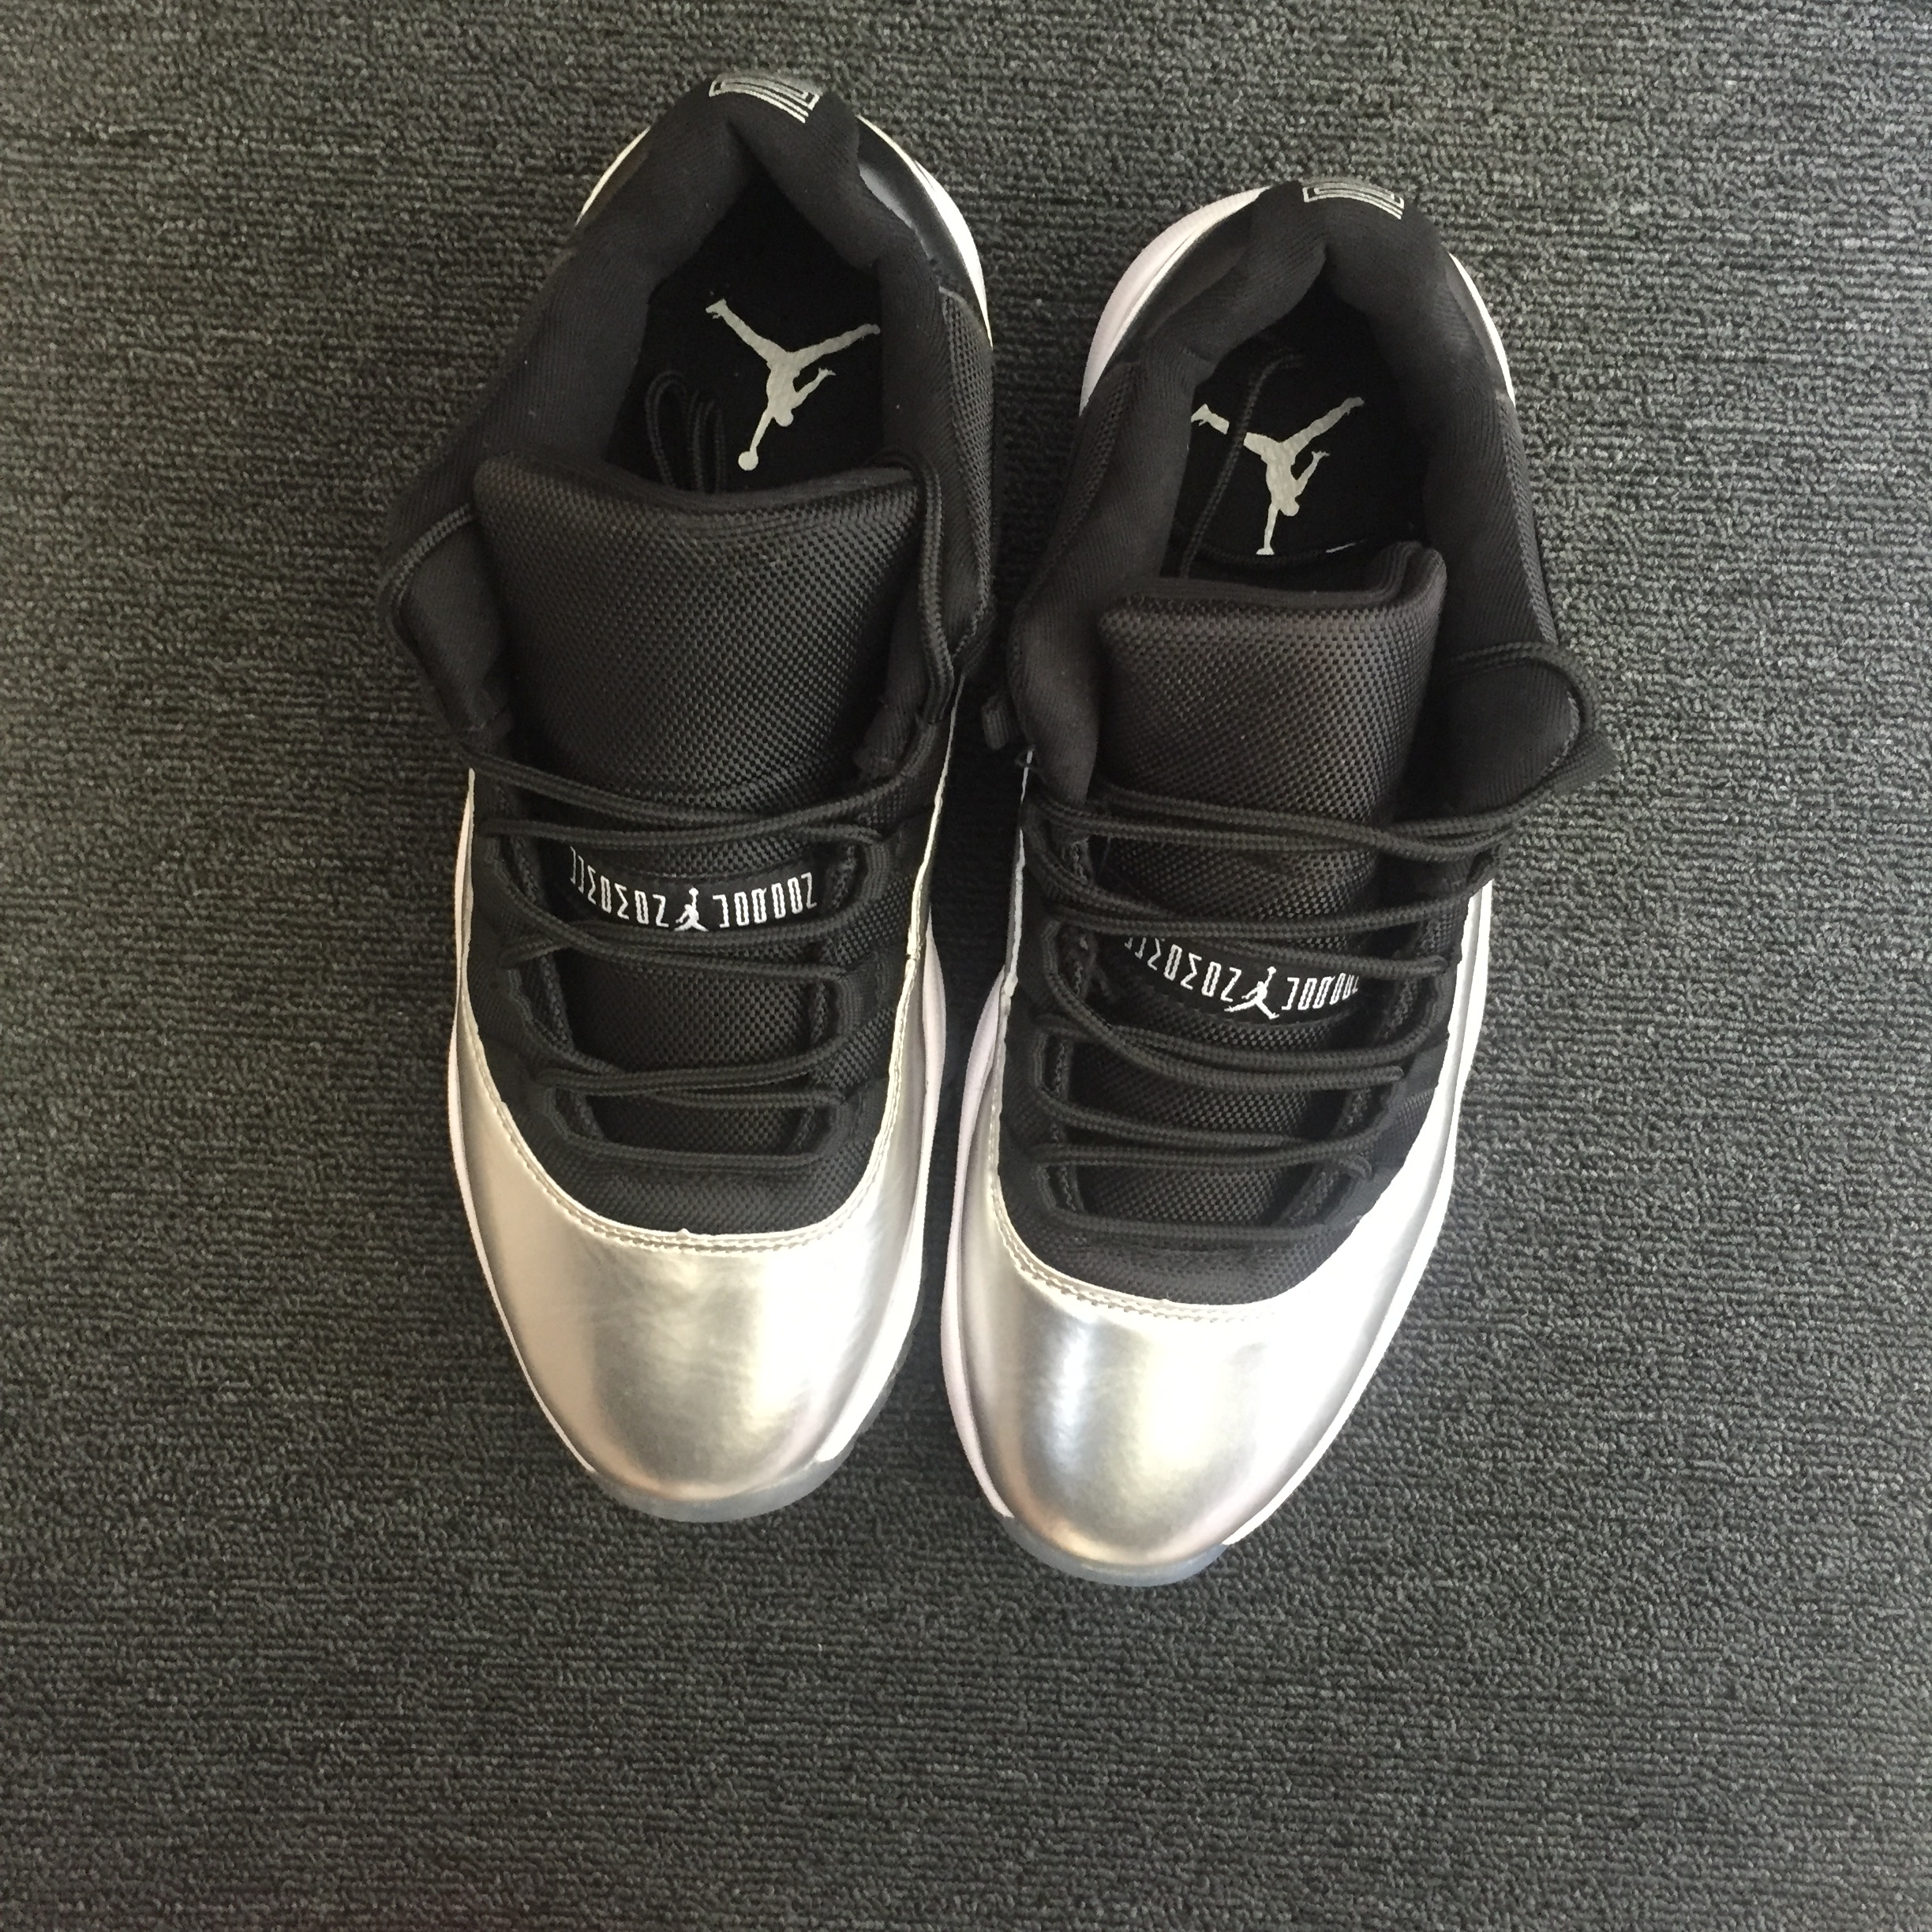 2017 Air Jordan 11 Low Black Silver Shoes - Click Image to Close